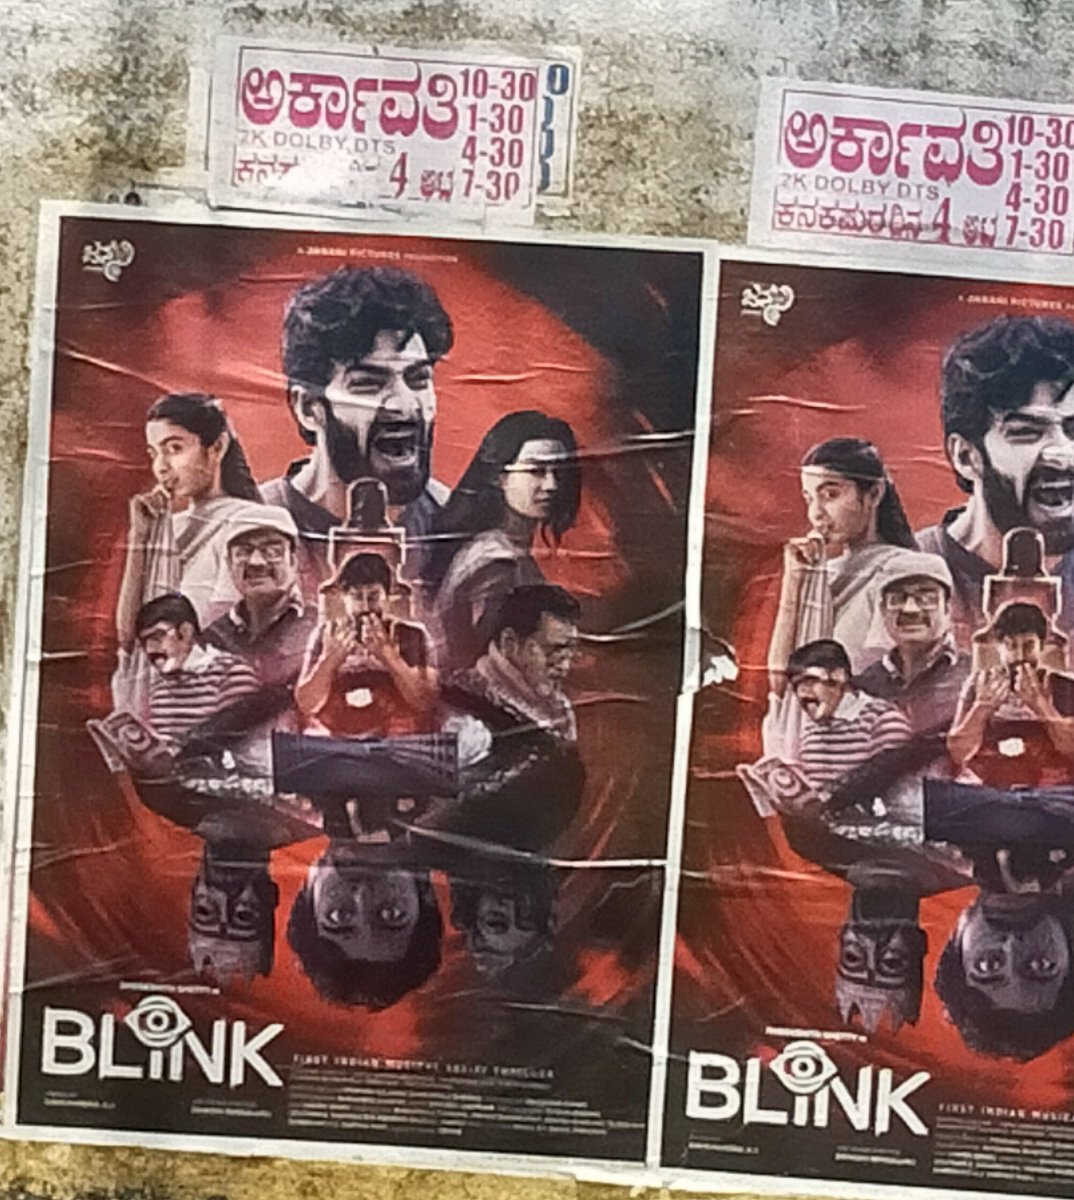 #Blink At Kanakapura ❤️‍🔥 - Arkavathi Theatre 🎭

@srinidhi_Blore